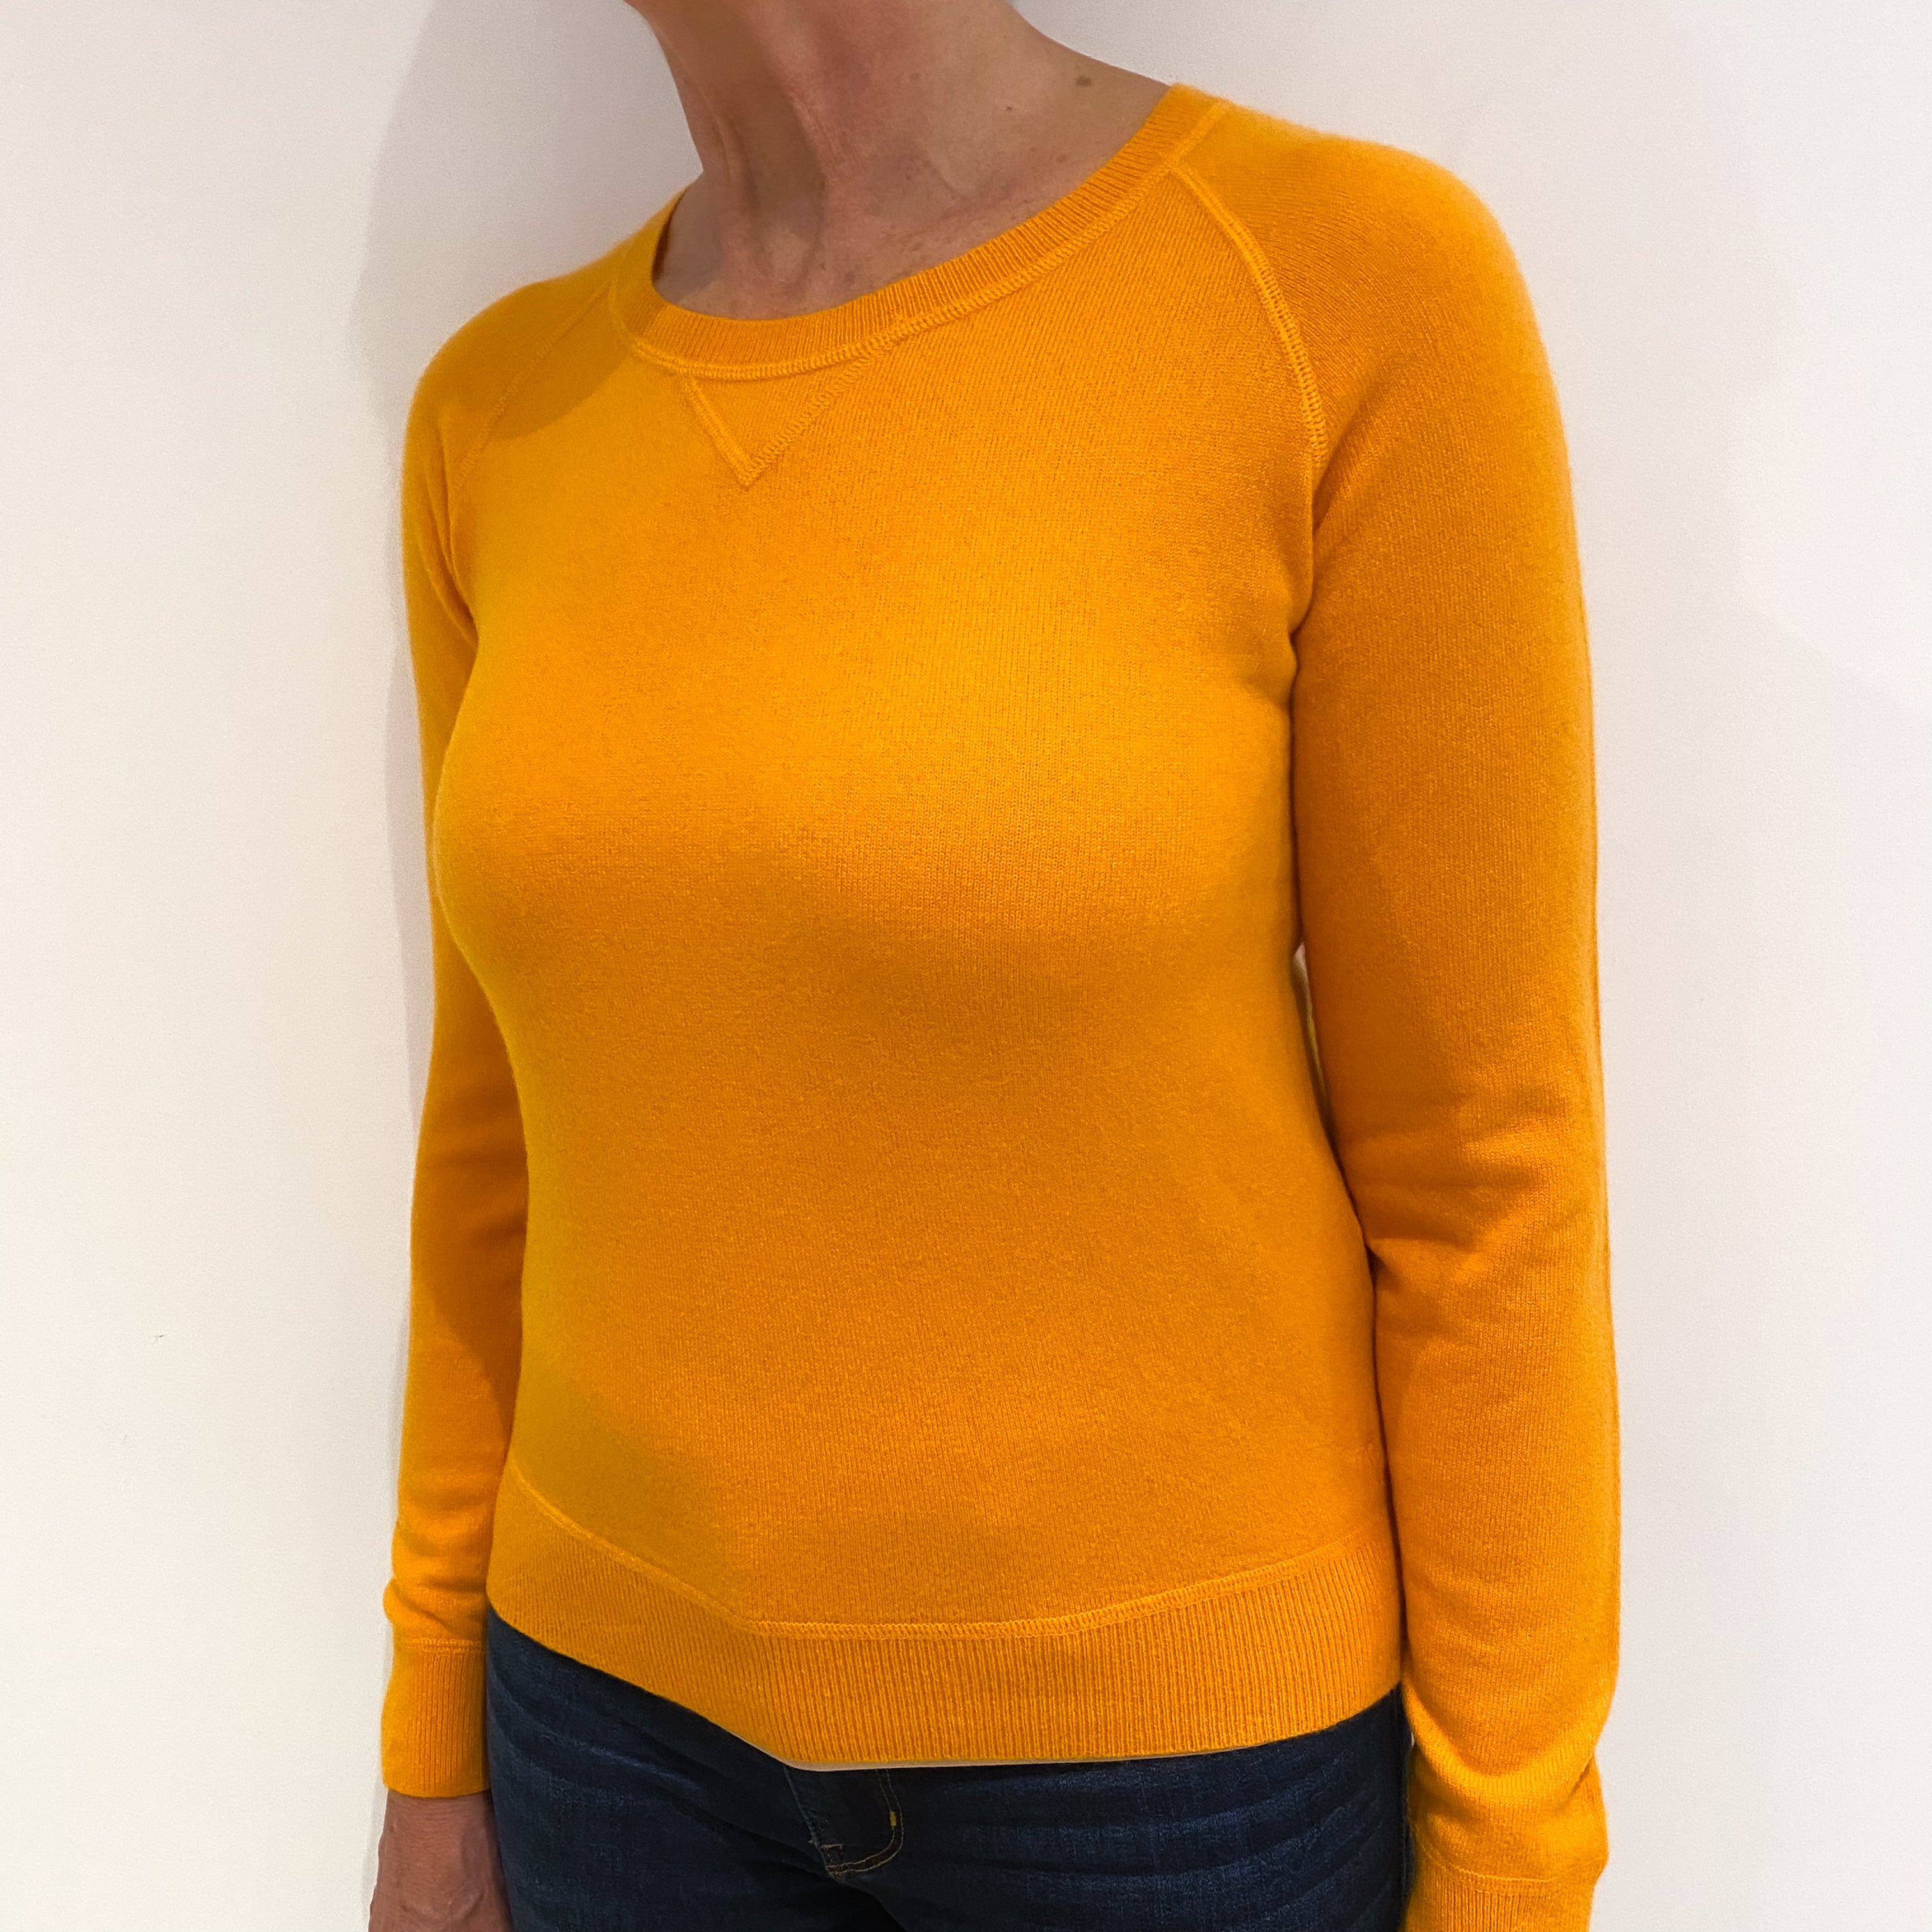 Marigold Orange Sweatshirt Style Cashmere Crew Neck Jumper Medium